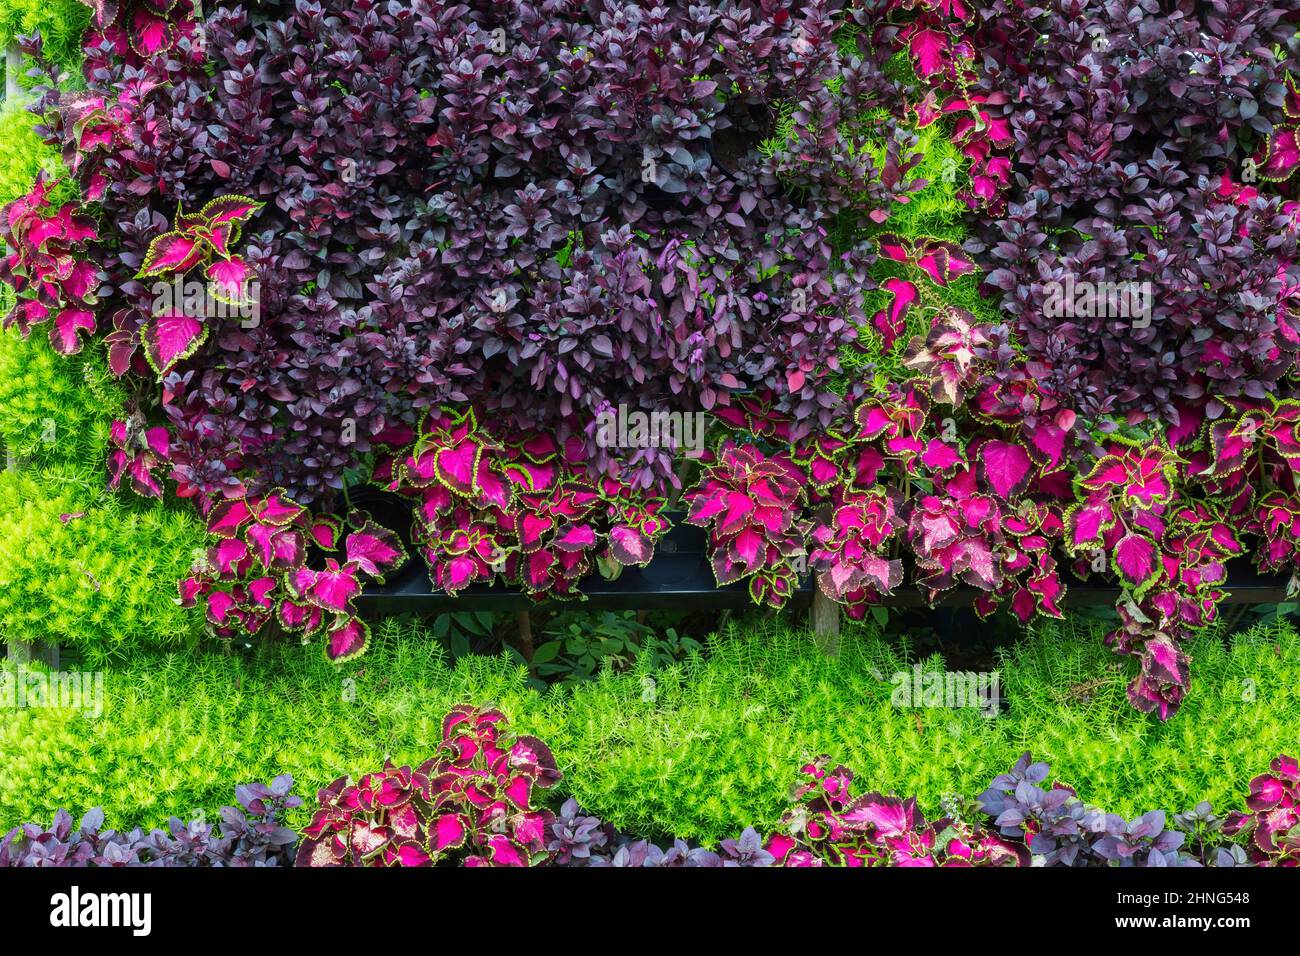 Vertical gardening wall with purple variegated Solenostemon - Coleus, Alternanthera 'Little Ruby' and Sedum reflexum 'Angelina' - Stonecrop plants in Stock Photo